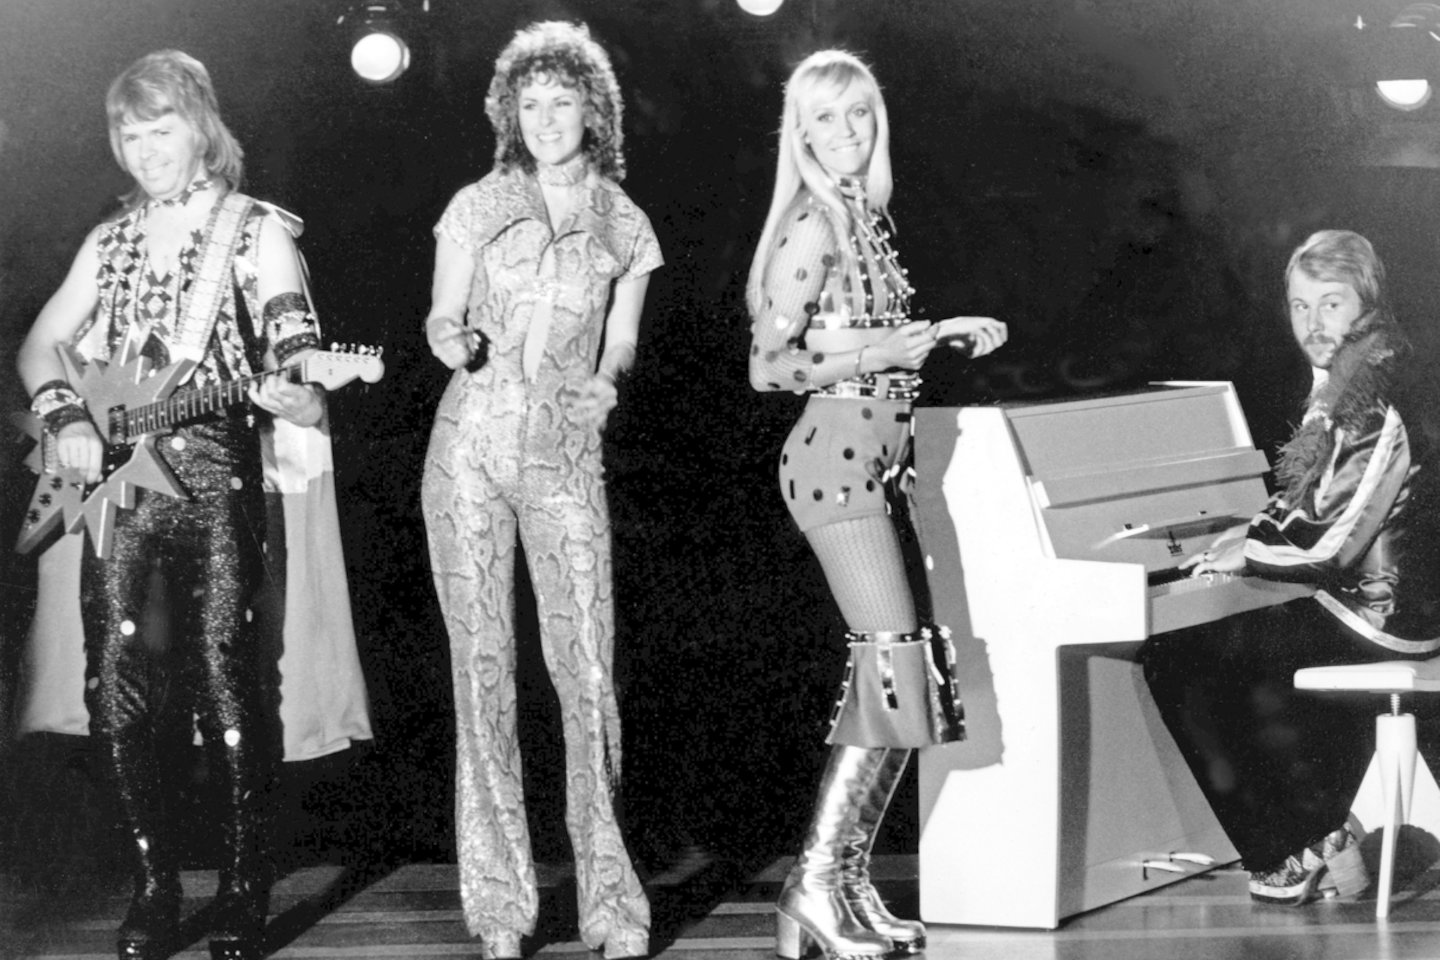  Grupė ABBA.<br> Imago Images/Scanpix nuotr.